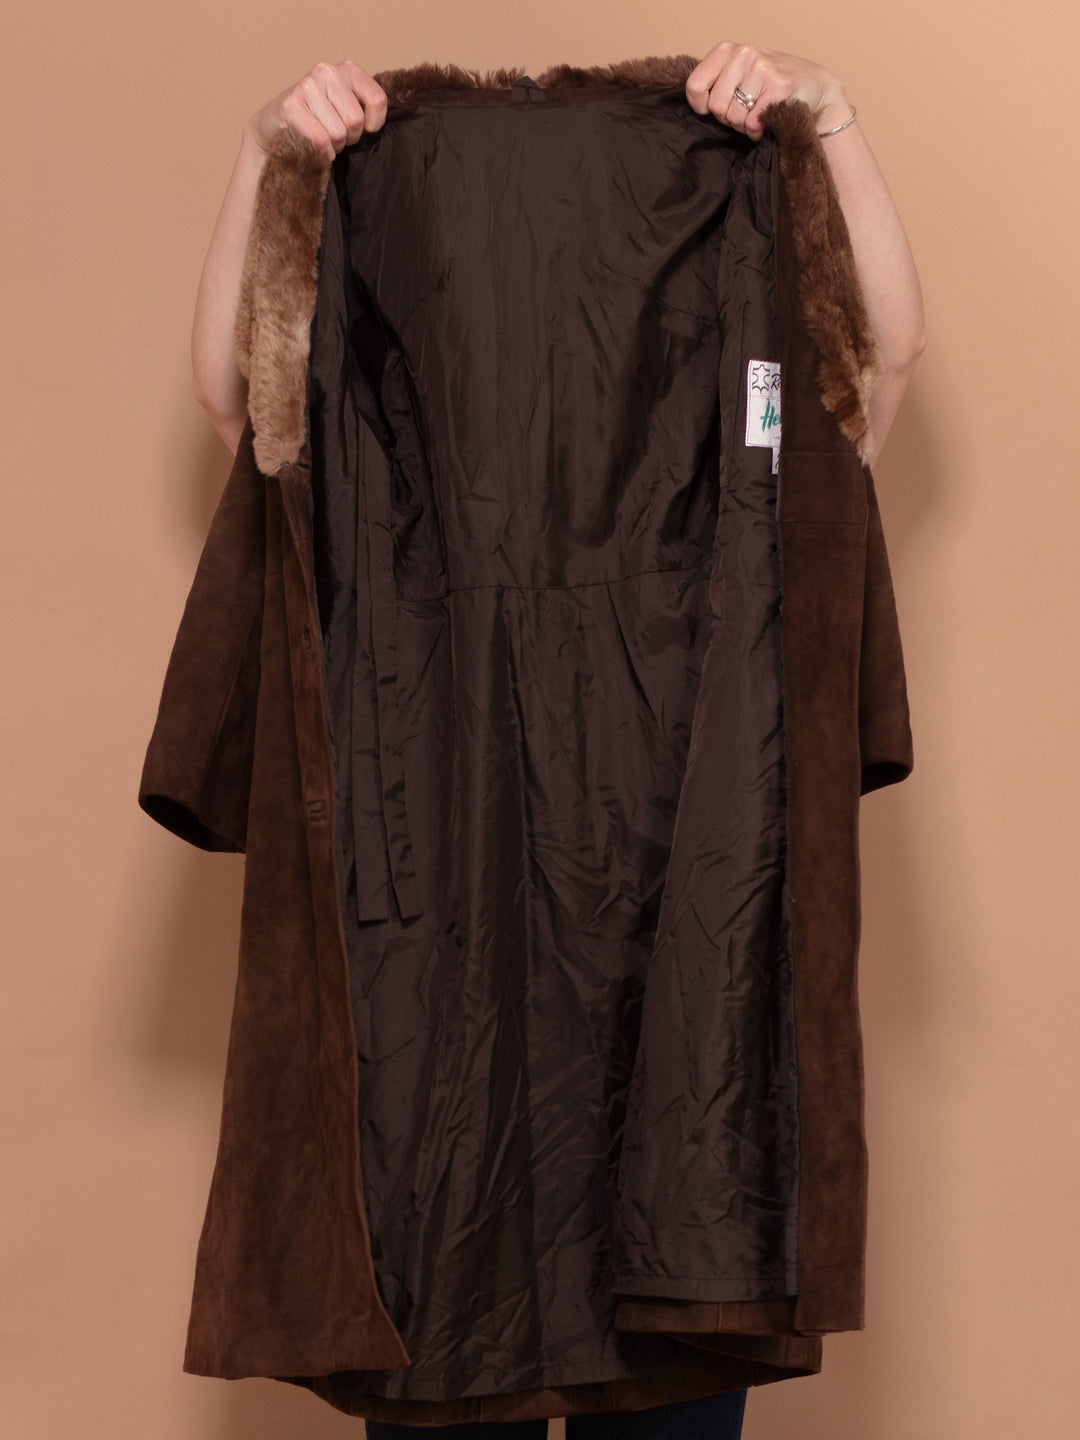 Vintage 70's Women Suede Shearling Coat in Brown